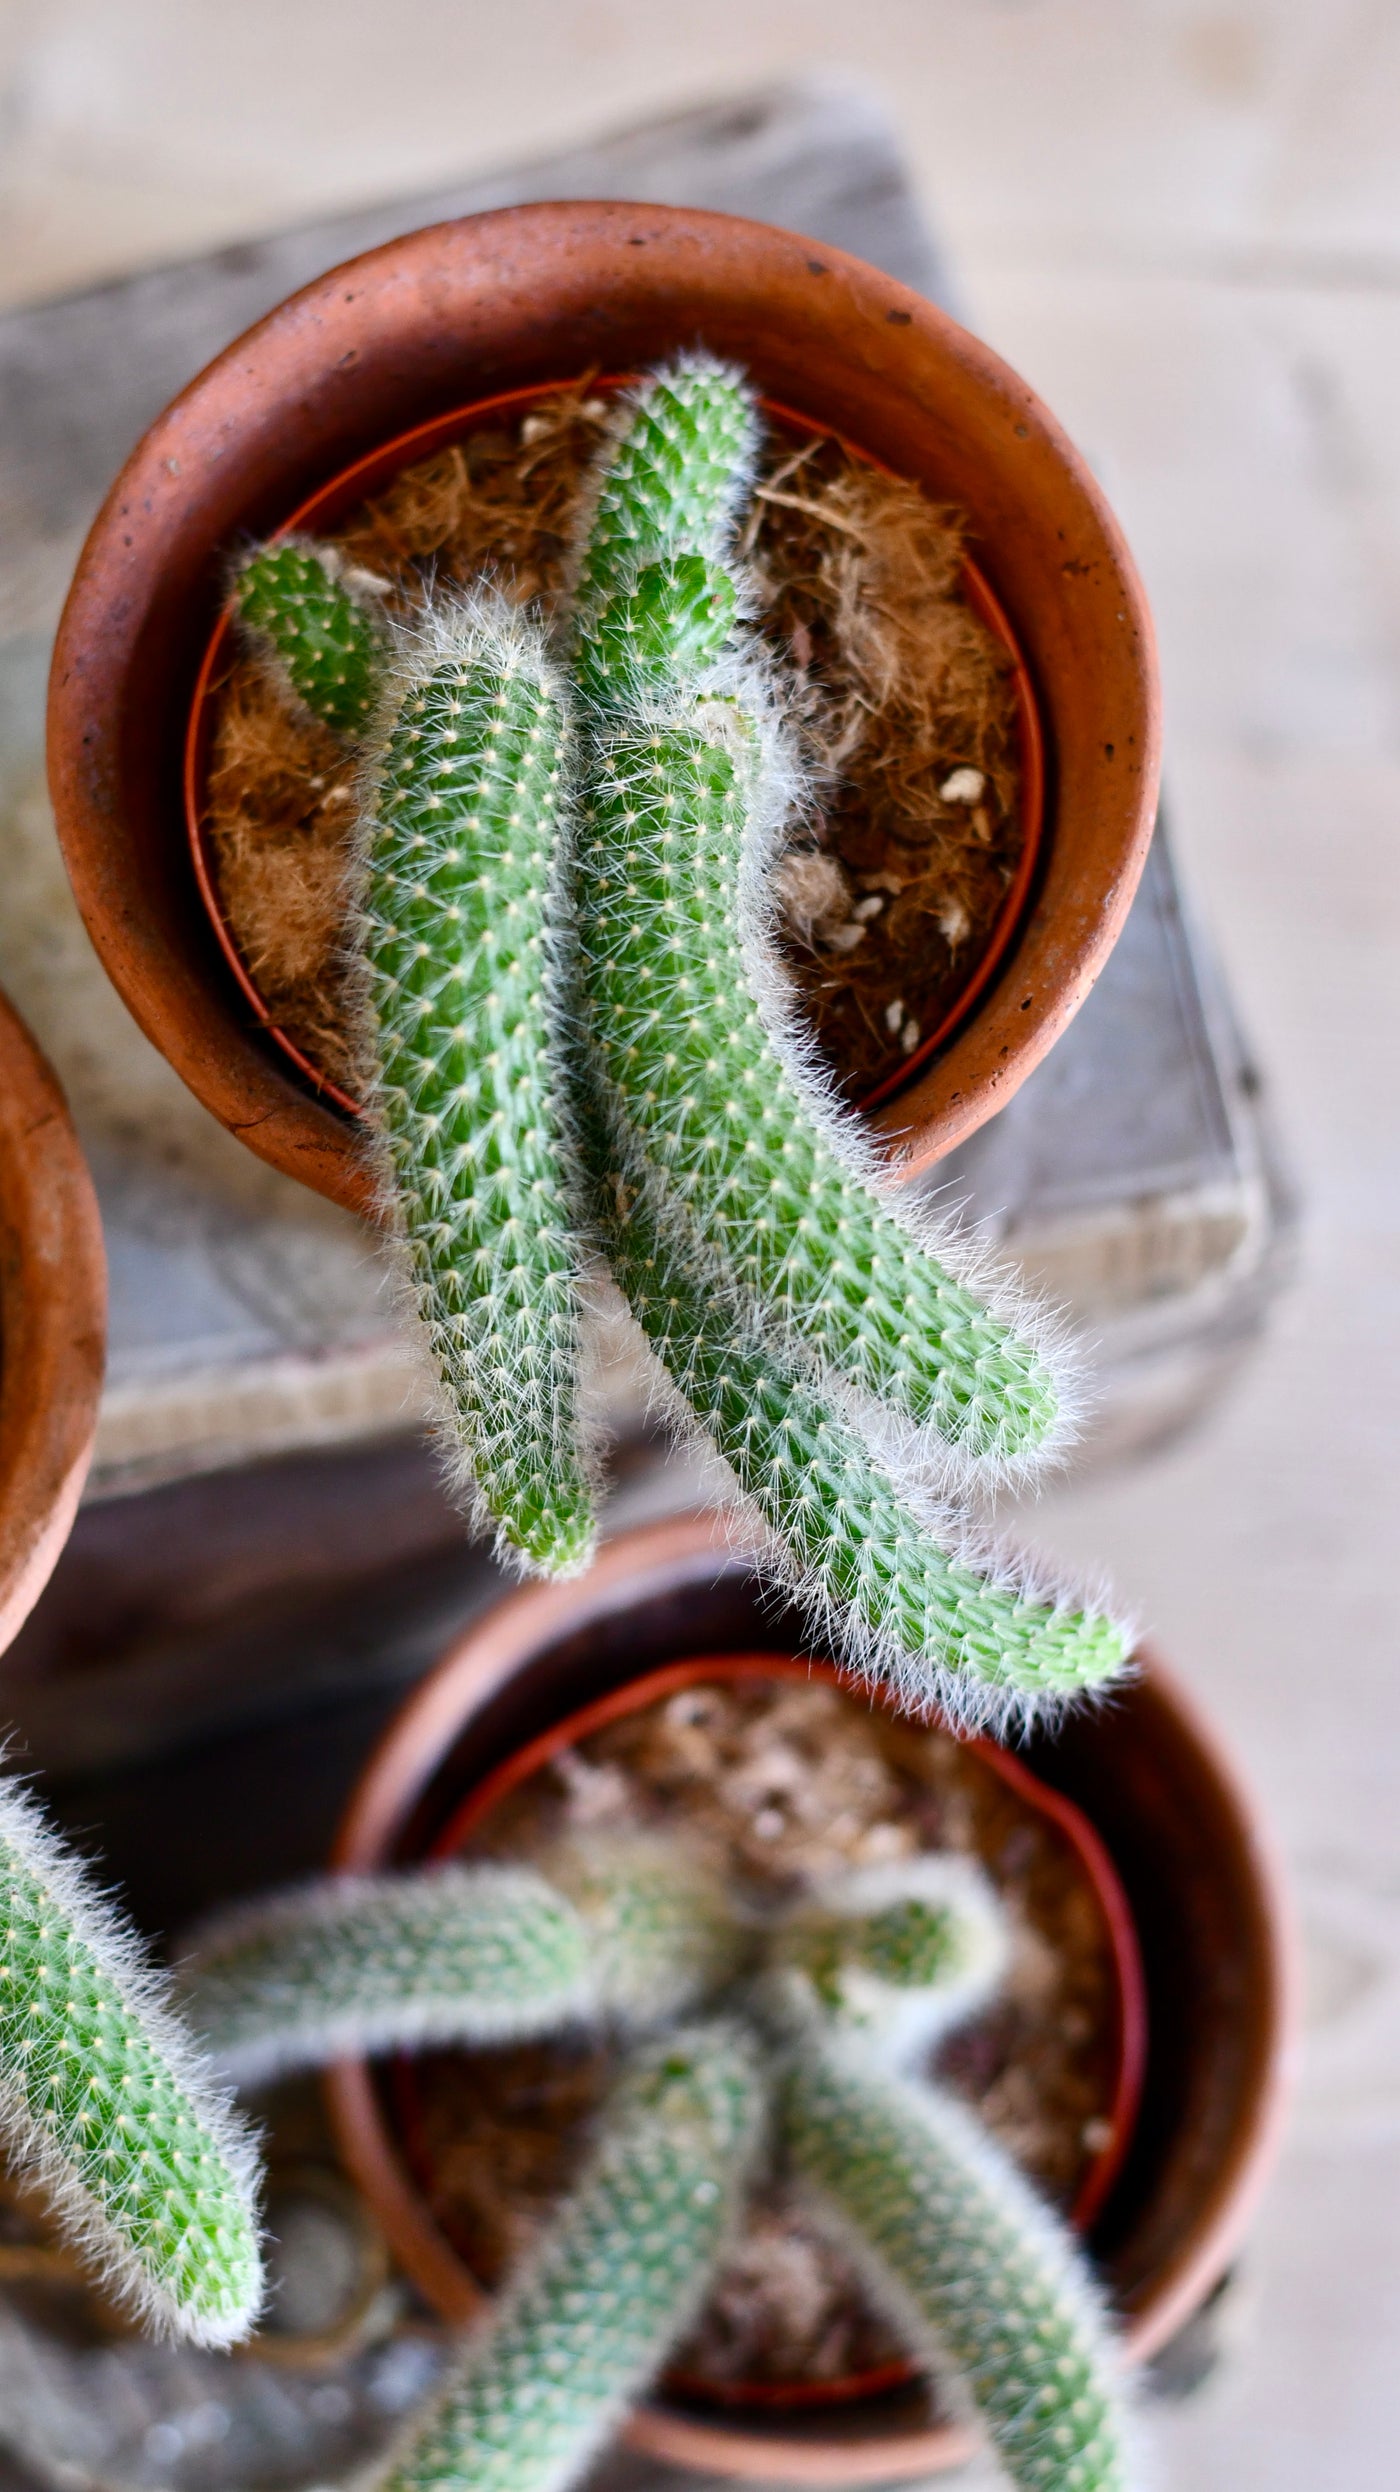 Baby Hildenwintera Colademononis or Monkey Tail Cactus